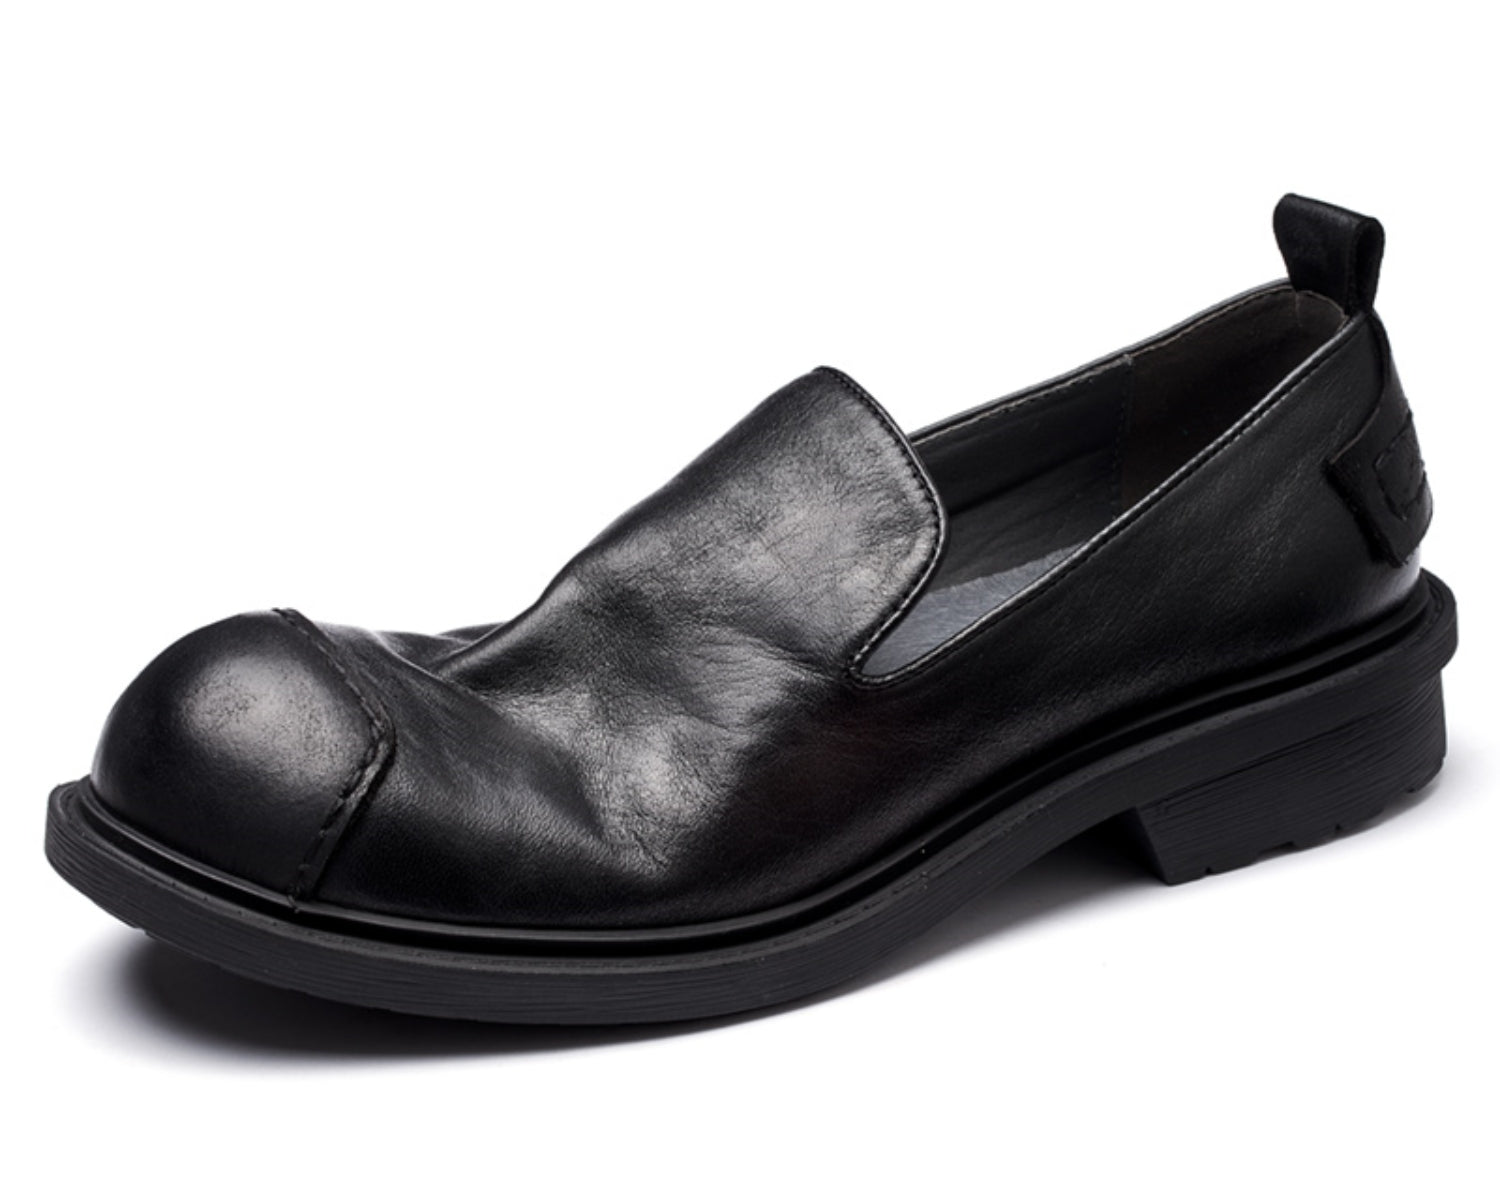 Genuine leather black manner boots versatile trendy lazy slip-on shoes0